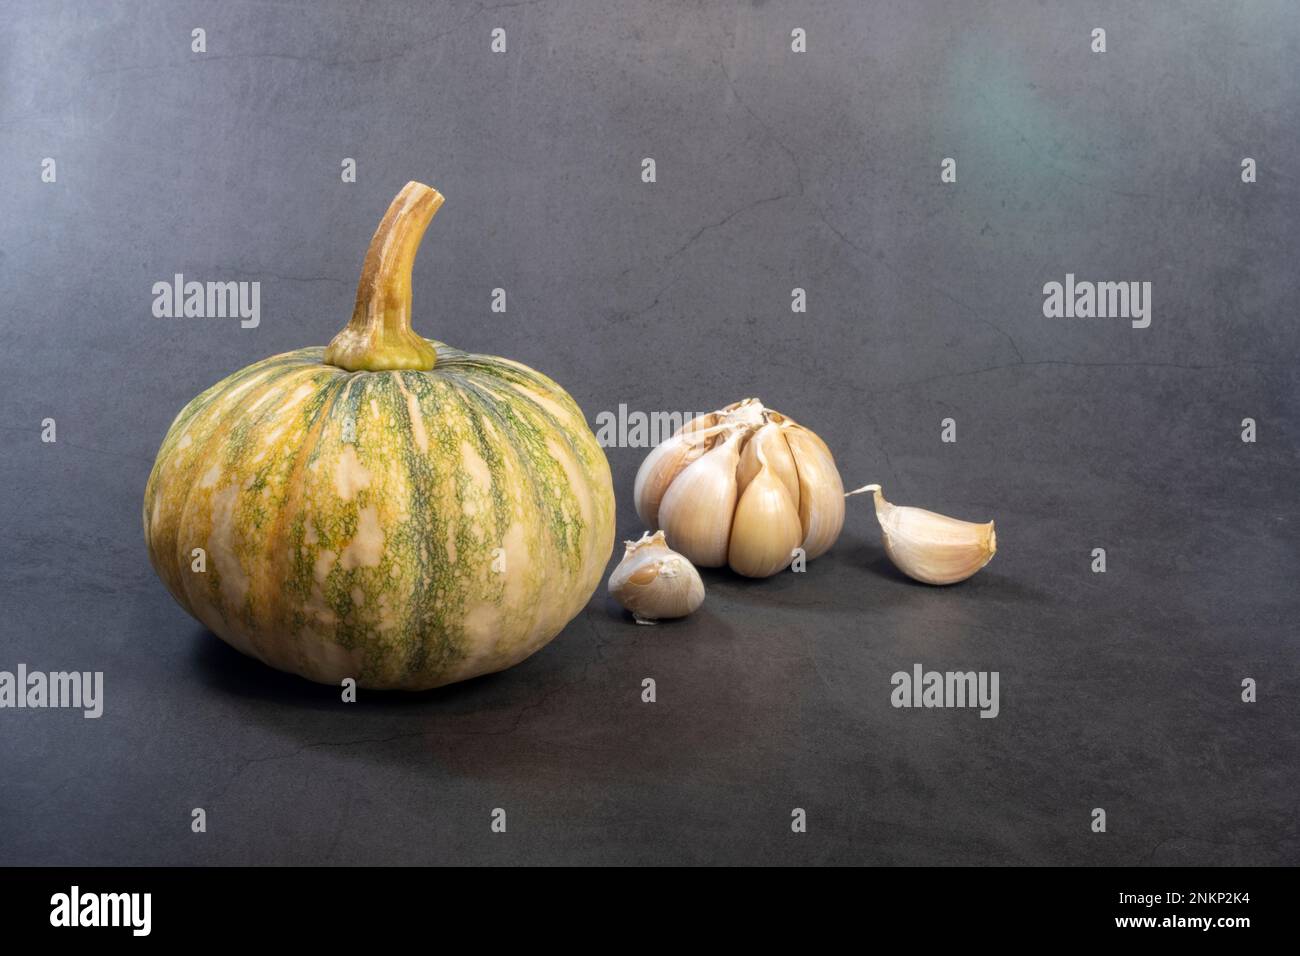 Raw pumpkin and garlic vegetable on a dark background. Stock Photo